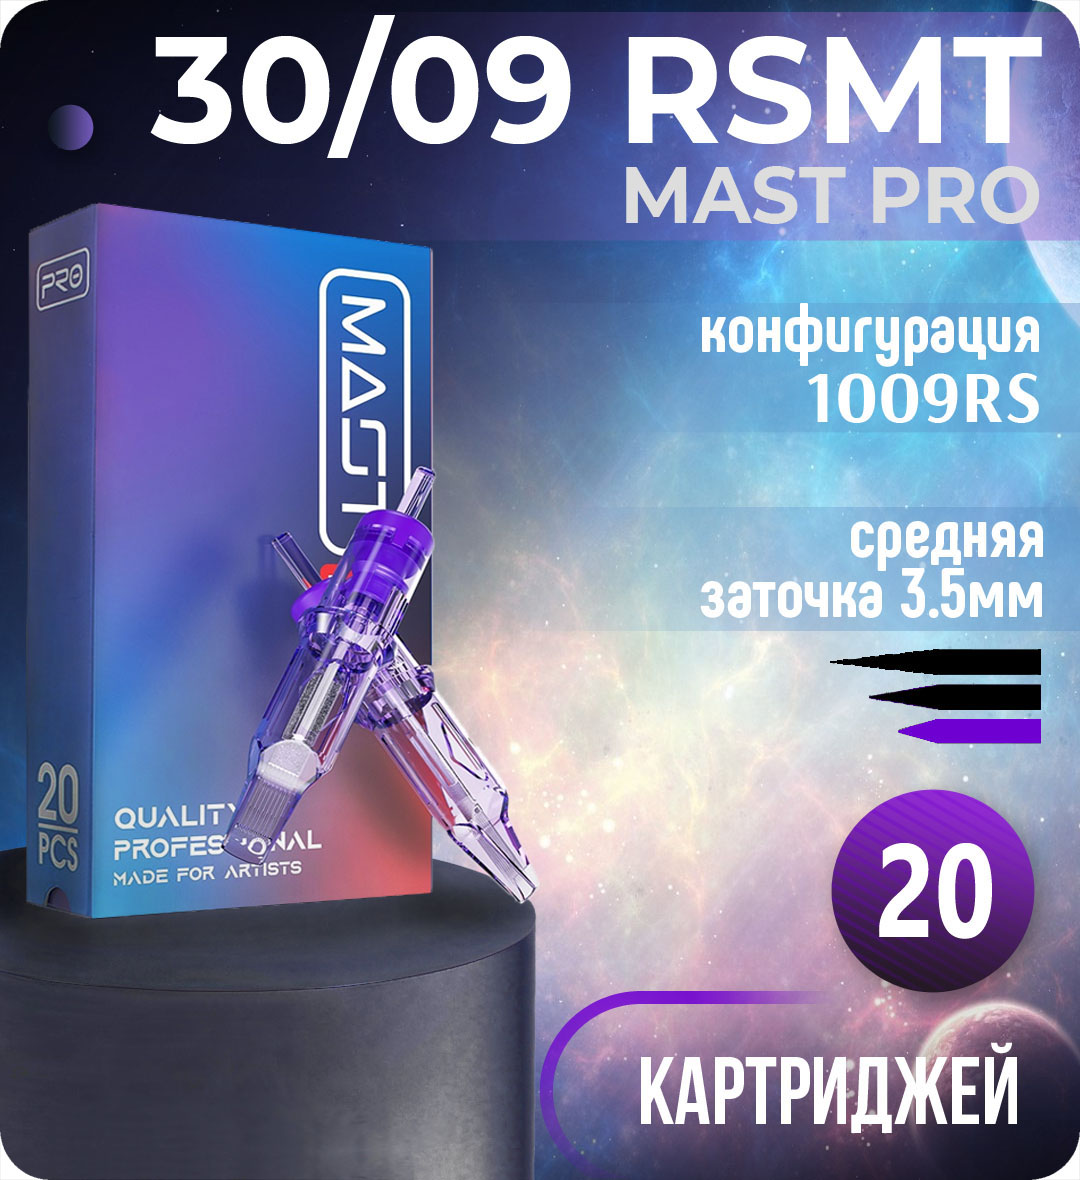 Картриджи Mast Pro 30/09 RSMT (1009RS) для тату, перманентного макияжа и татуажа Dragonhawk 20шт